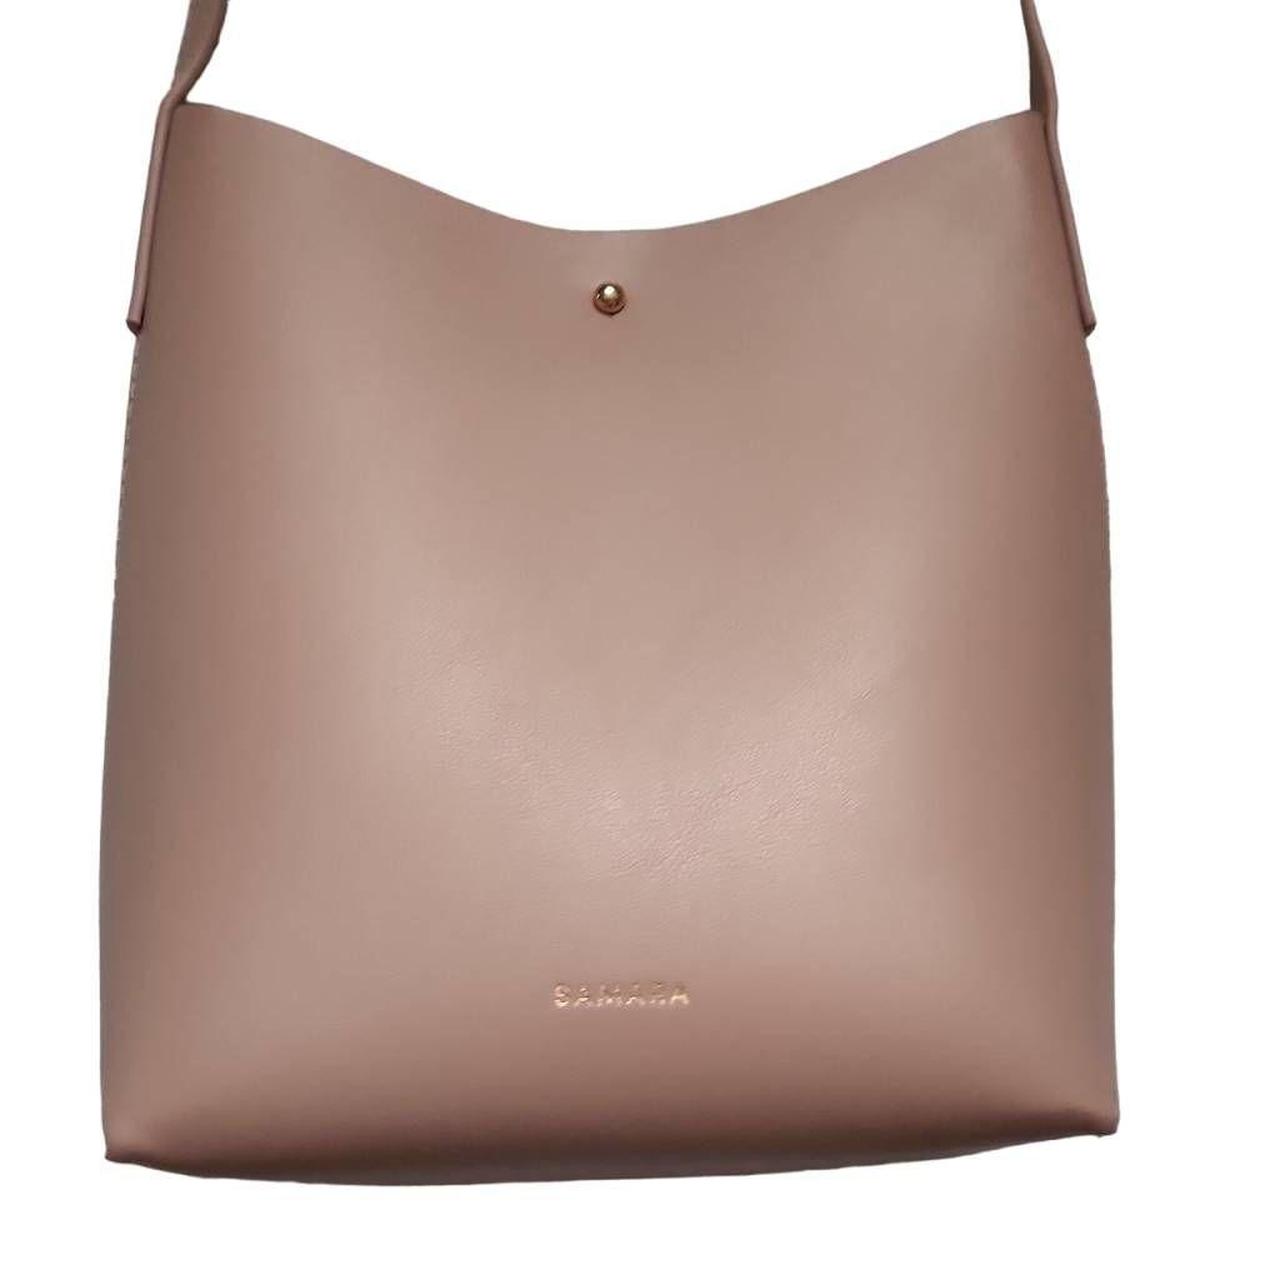 Samara, Bags, Brand New Samara Shoulder Bag Dusty Pink